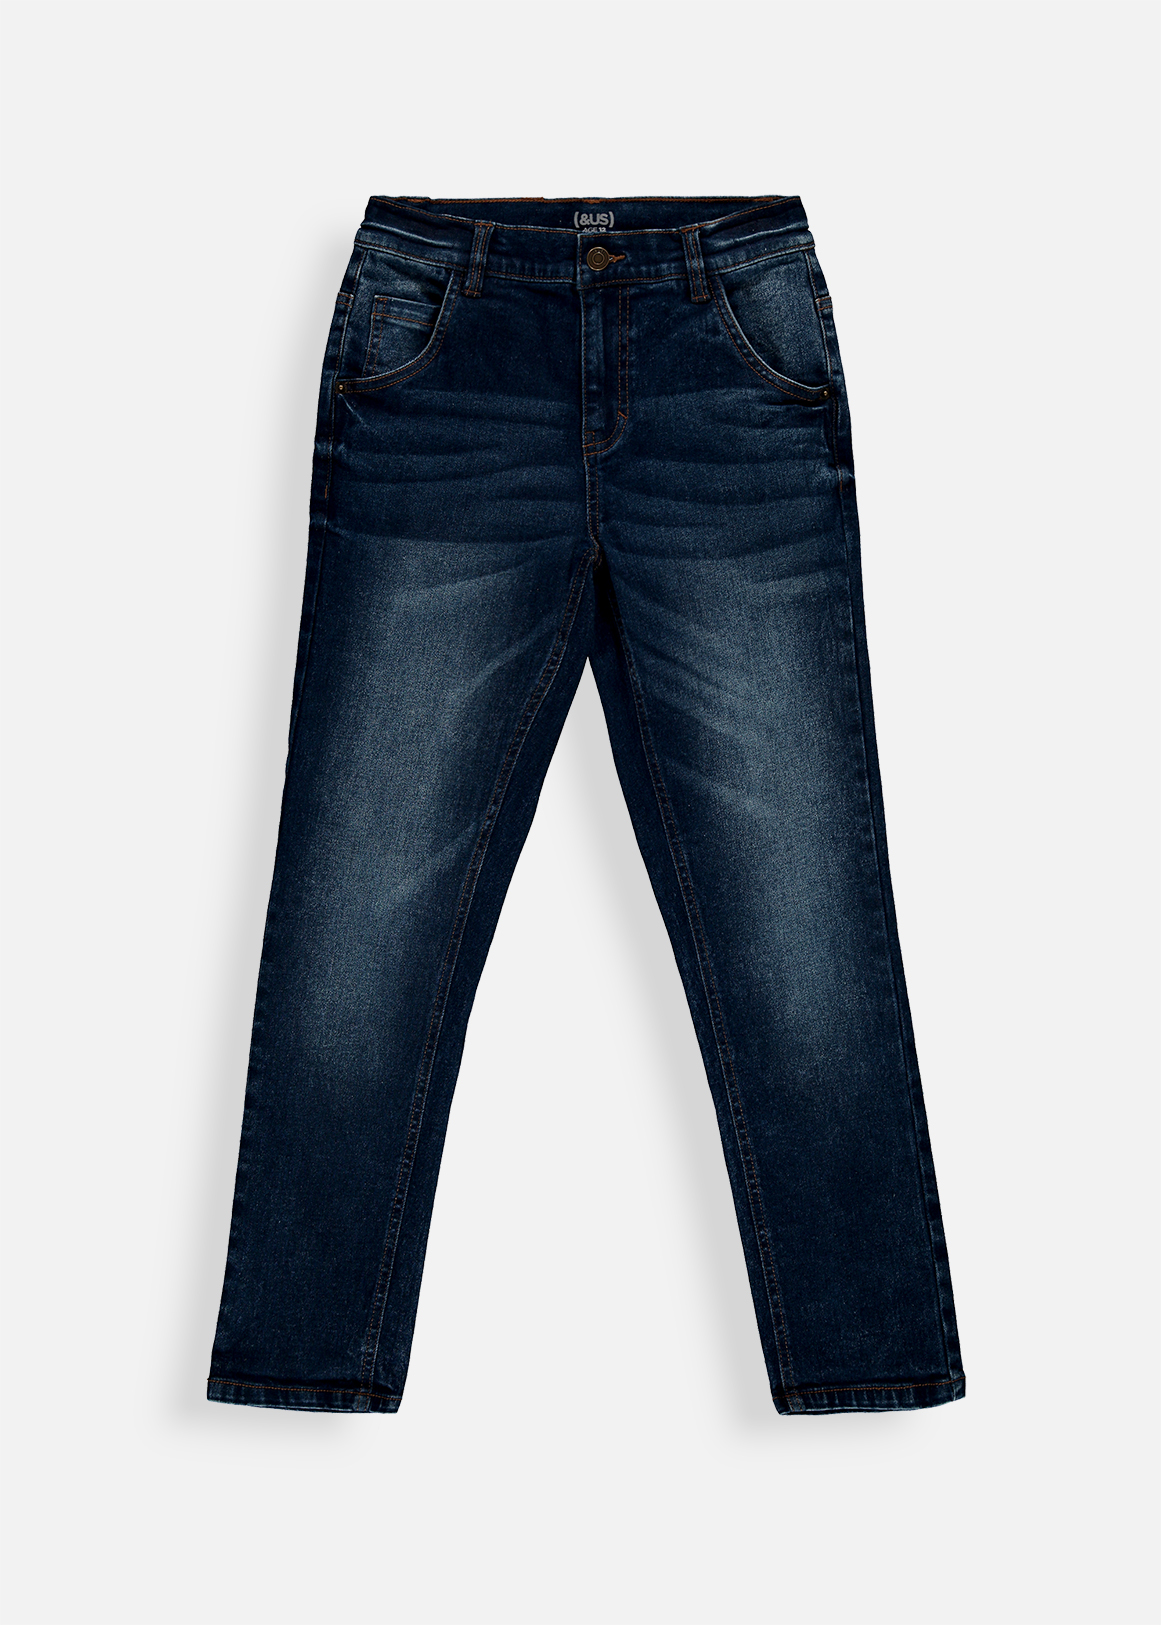 Adjustable Indigo Wash Jeans | Woolworths.co.za